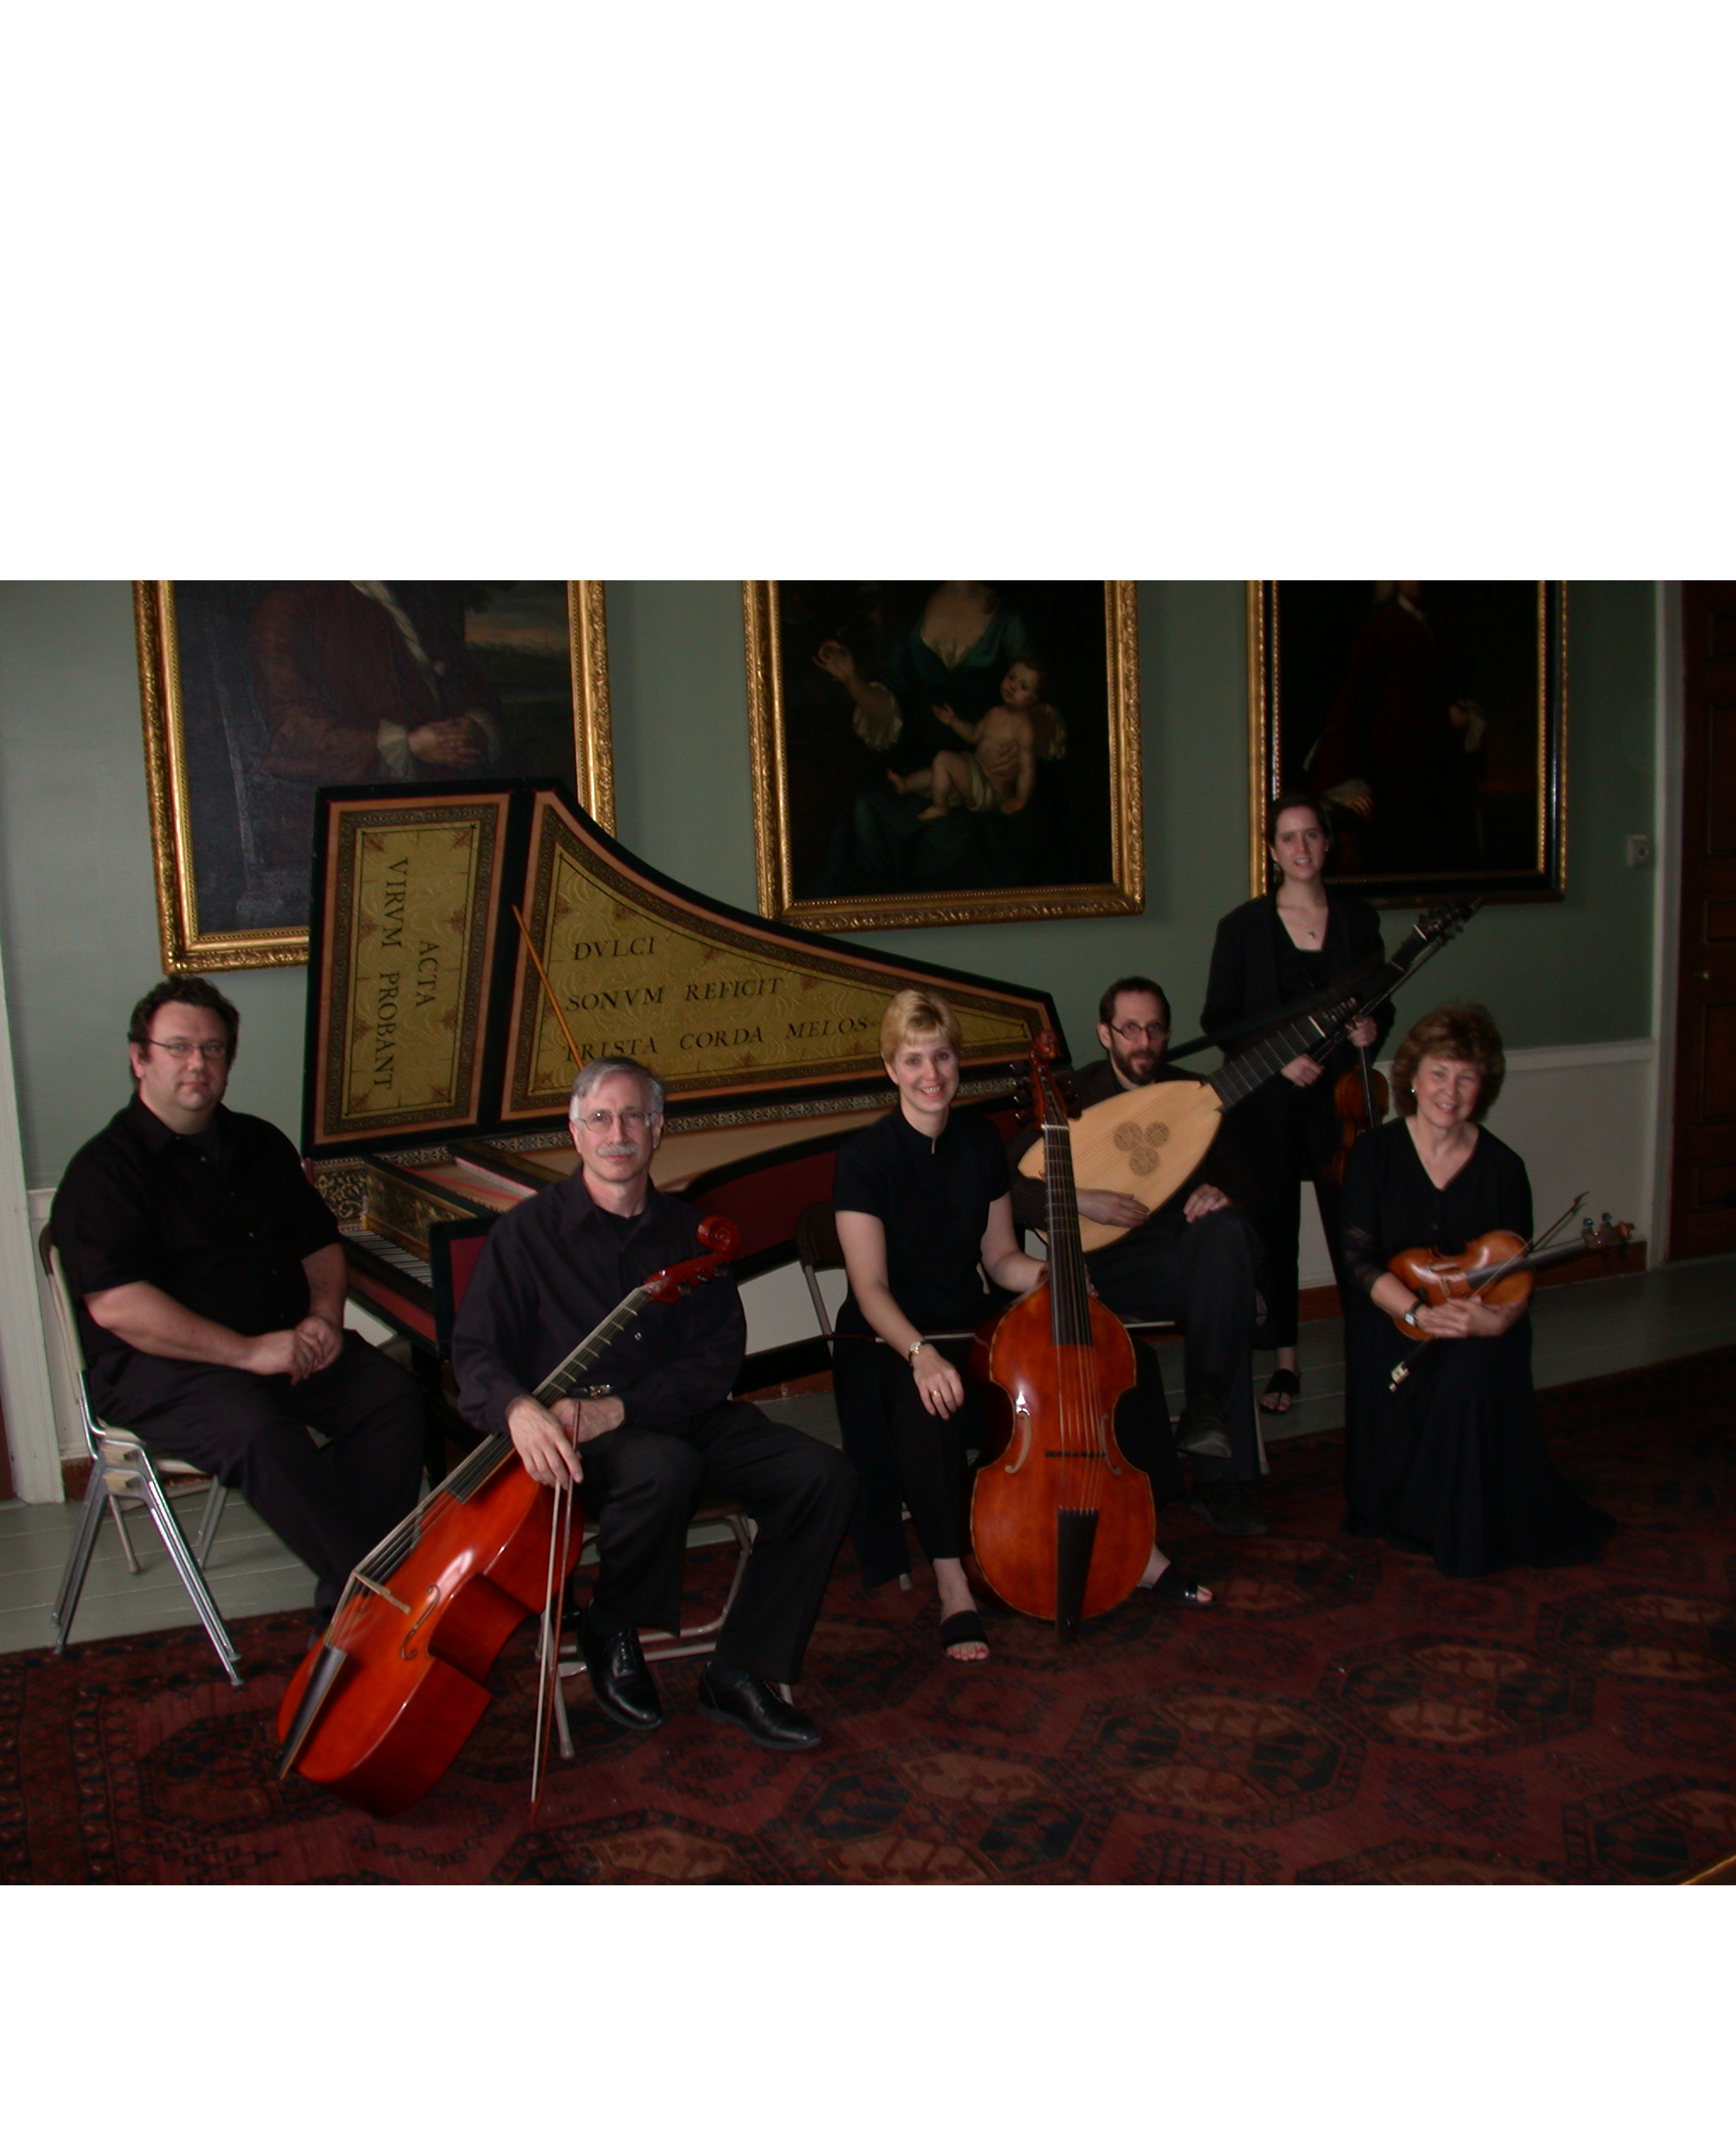 Ensemble Soleil members with gueast artists Alexander Bauhardt,harpsichord Joelle Morton,viol and Susanna Ogata, violin